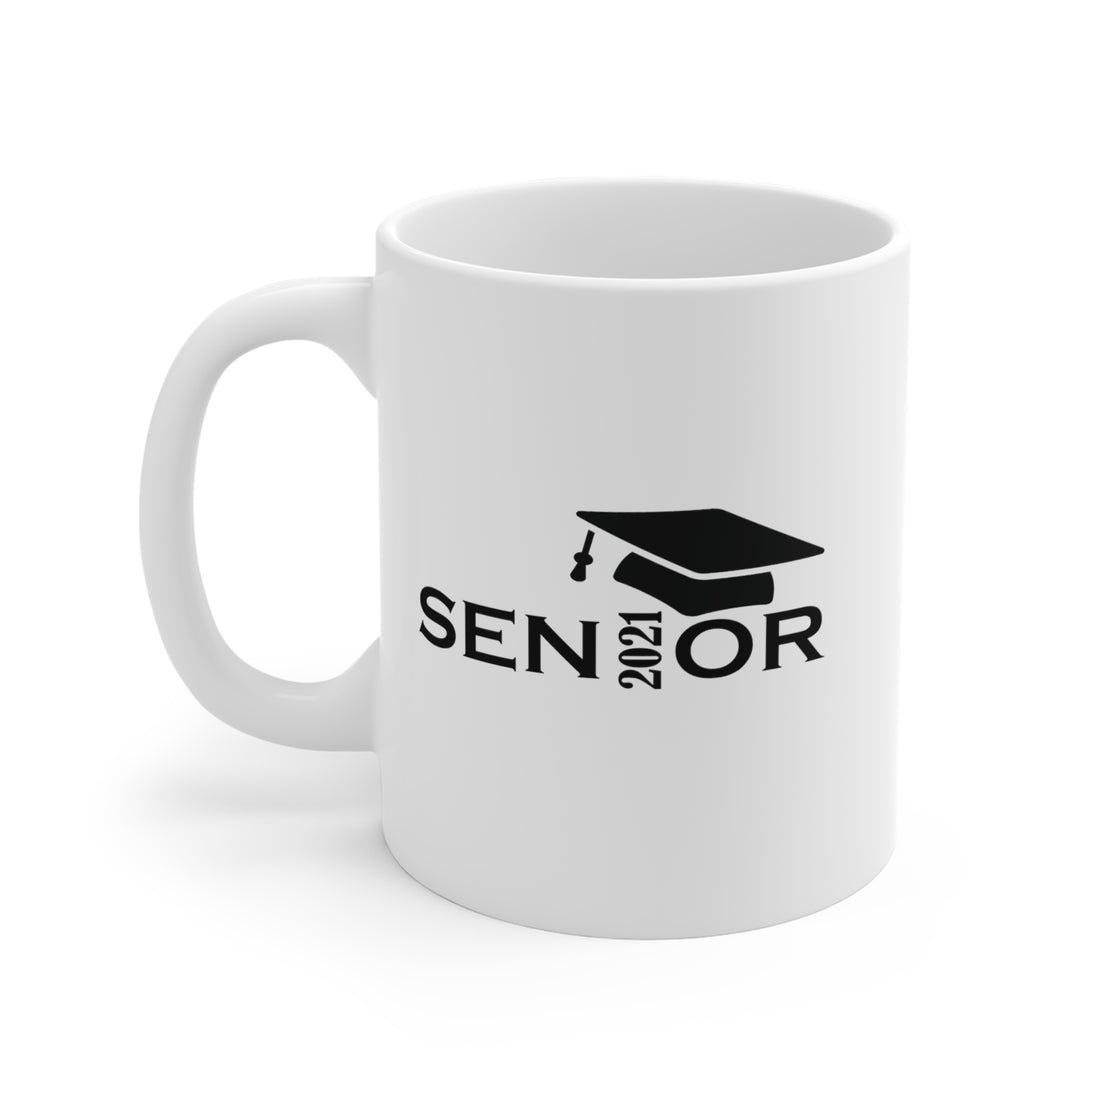 Senior Cap With Class Year Customizable - White Ceramic Mug 2 sizes Available